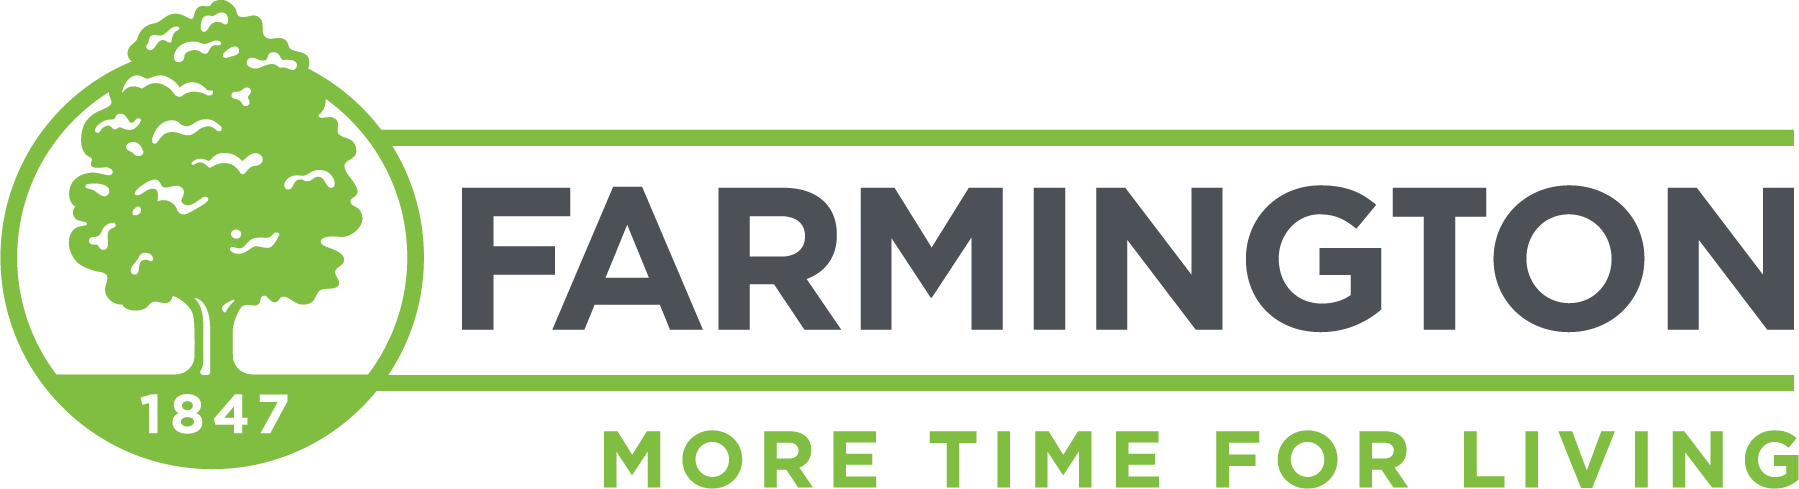 Farmington City Horizontal Green Logo